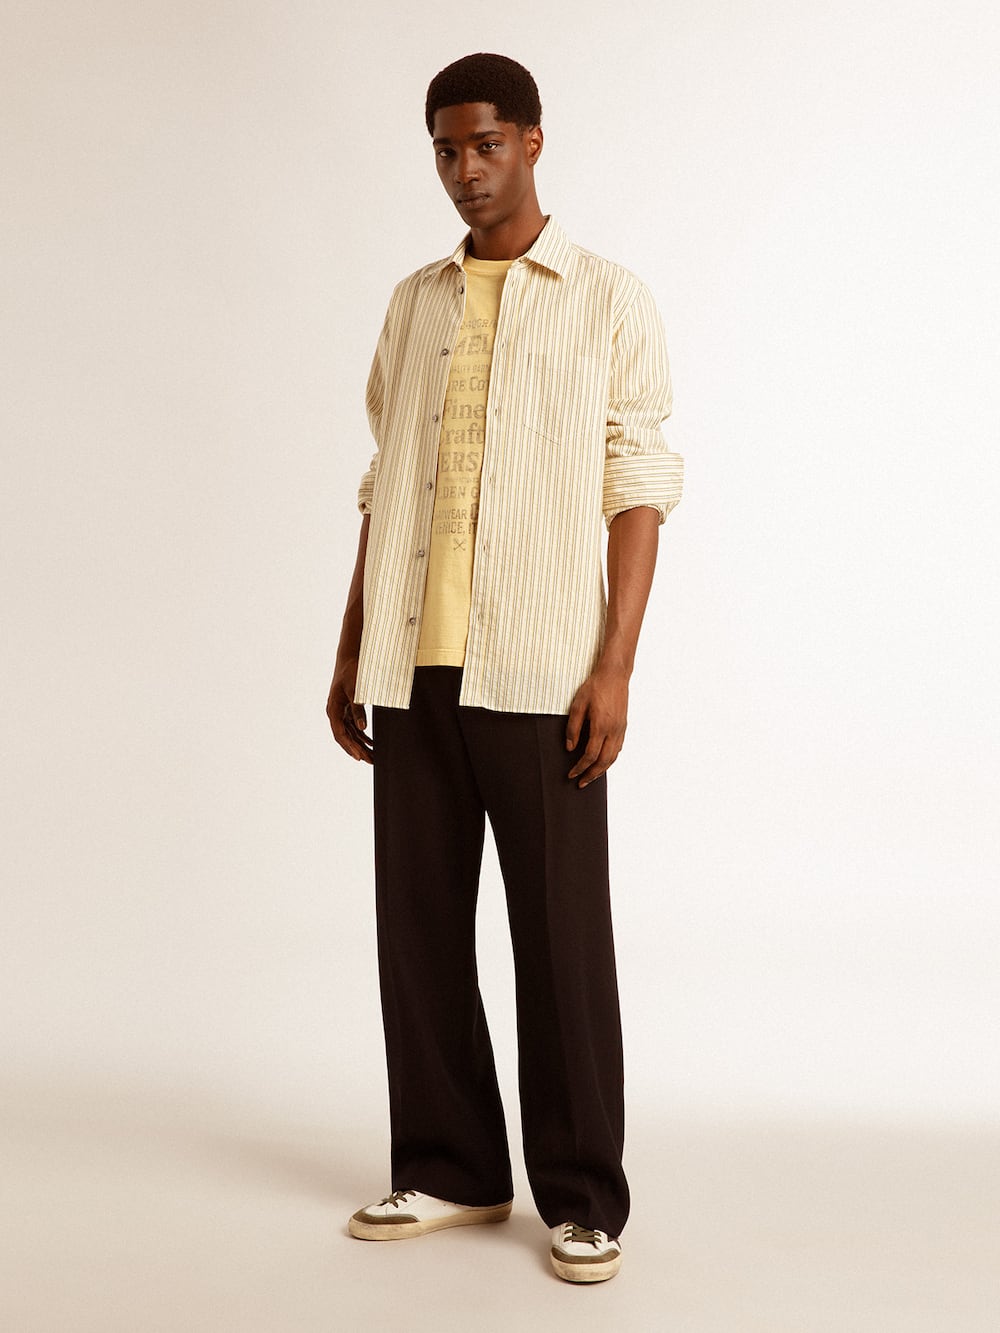 Golden Goose - Camisa de hombre de algodón en color crudo con motivo de rayas finas negras in 